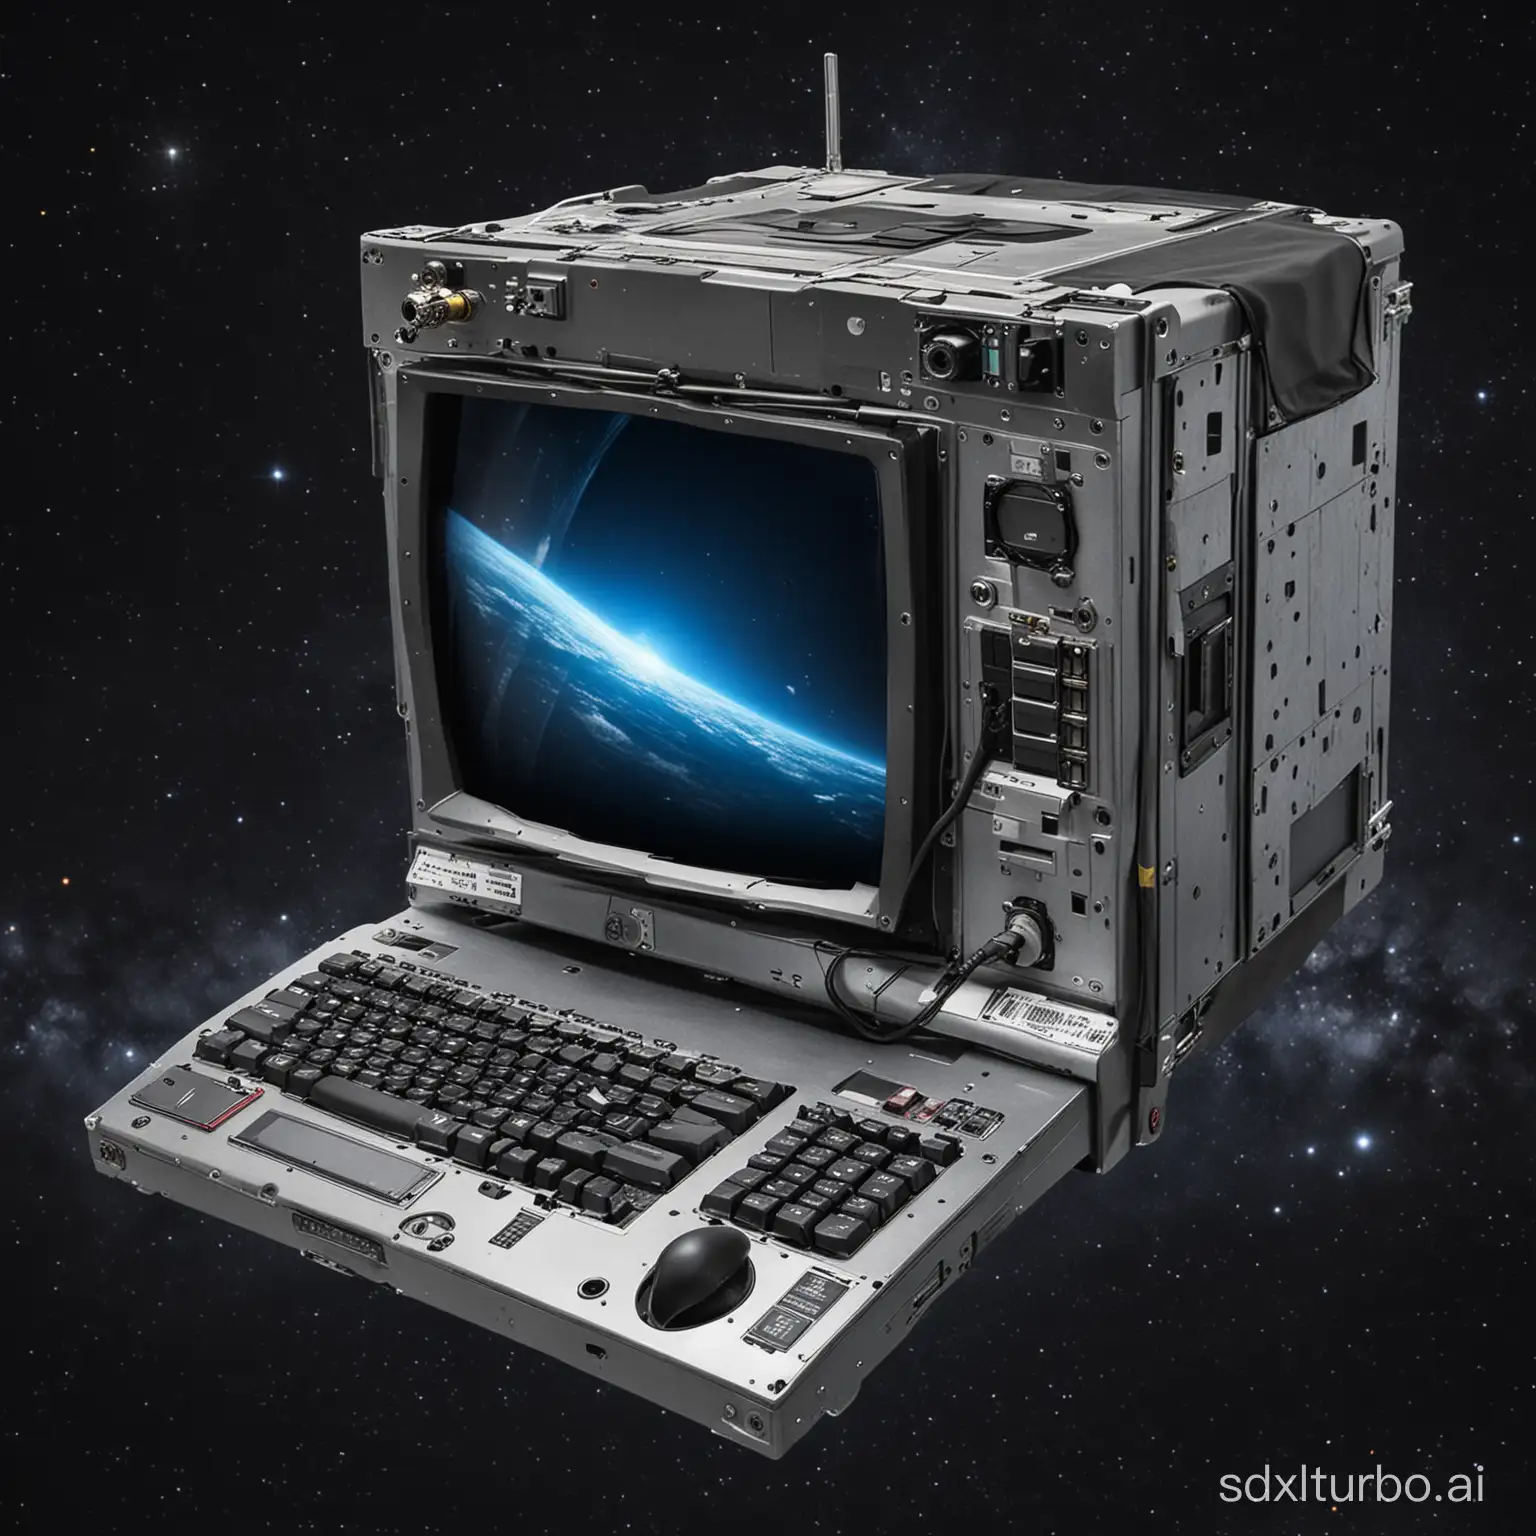 Starry-Galaxy-Surrounding-Futuristic-Laptop